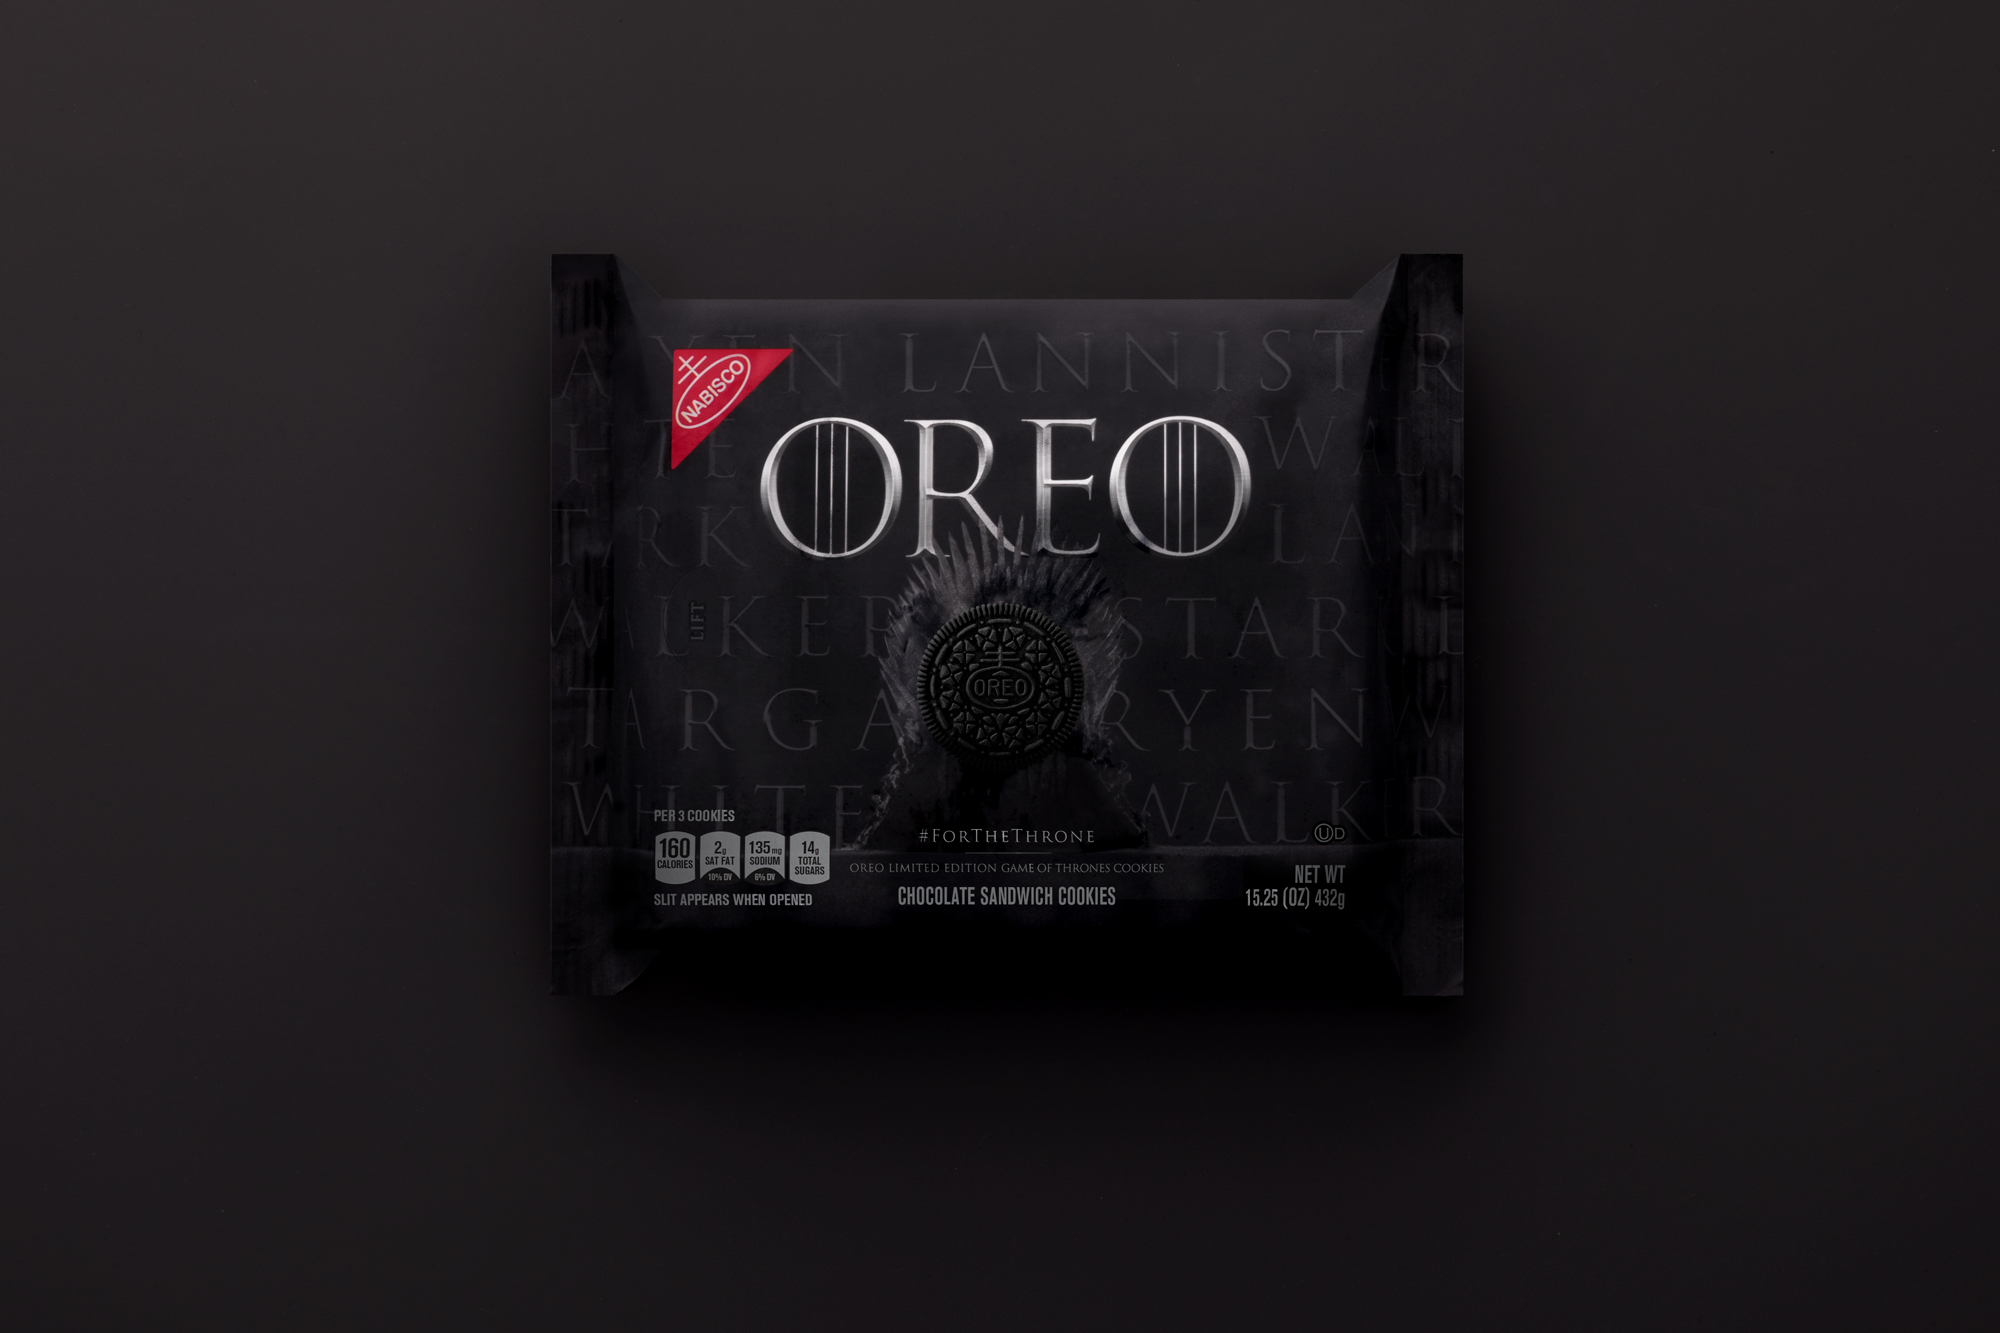 Game of Thrones OREO packaging